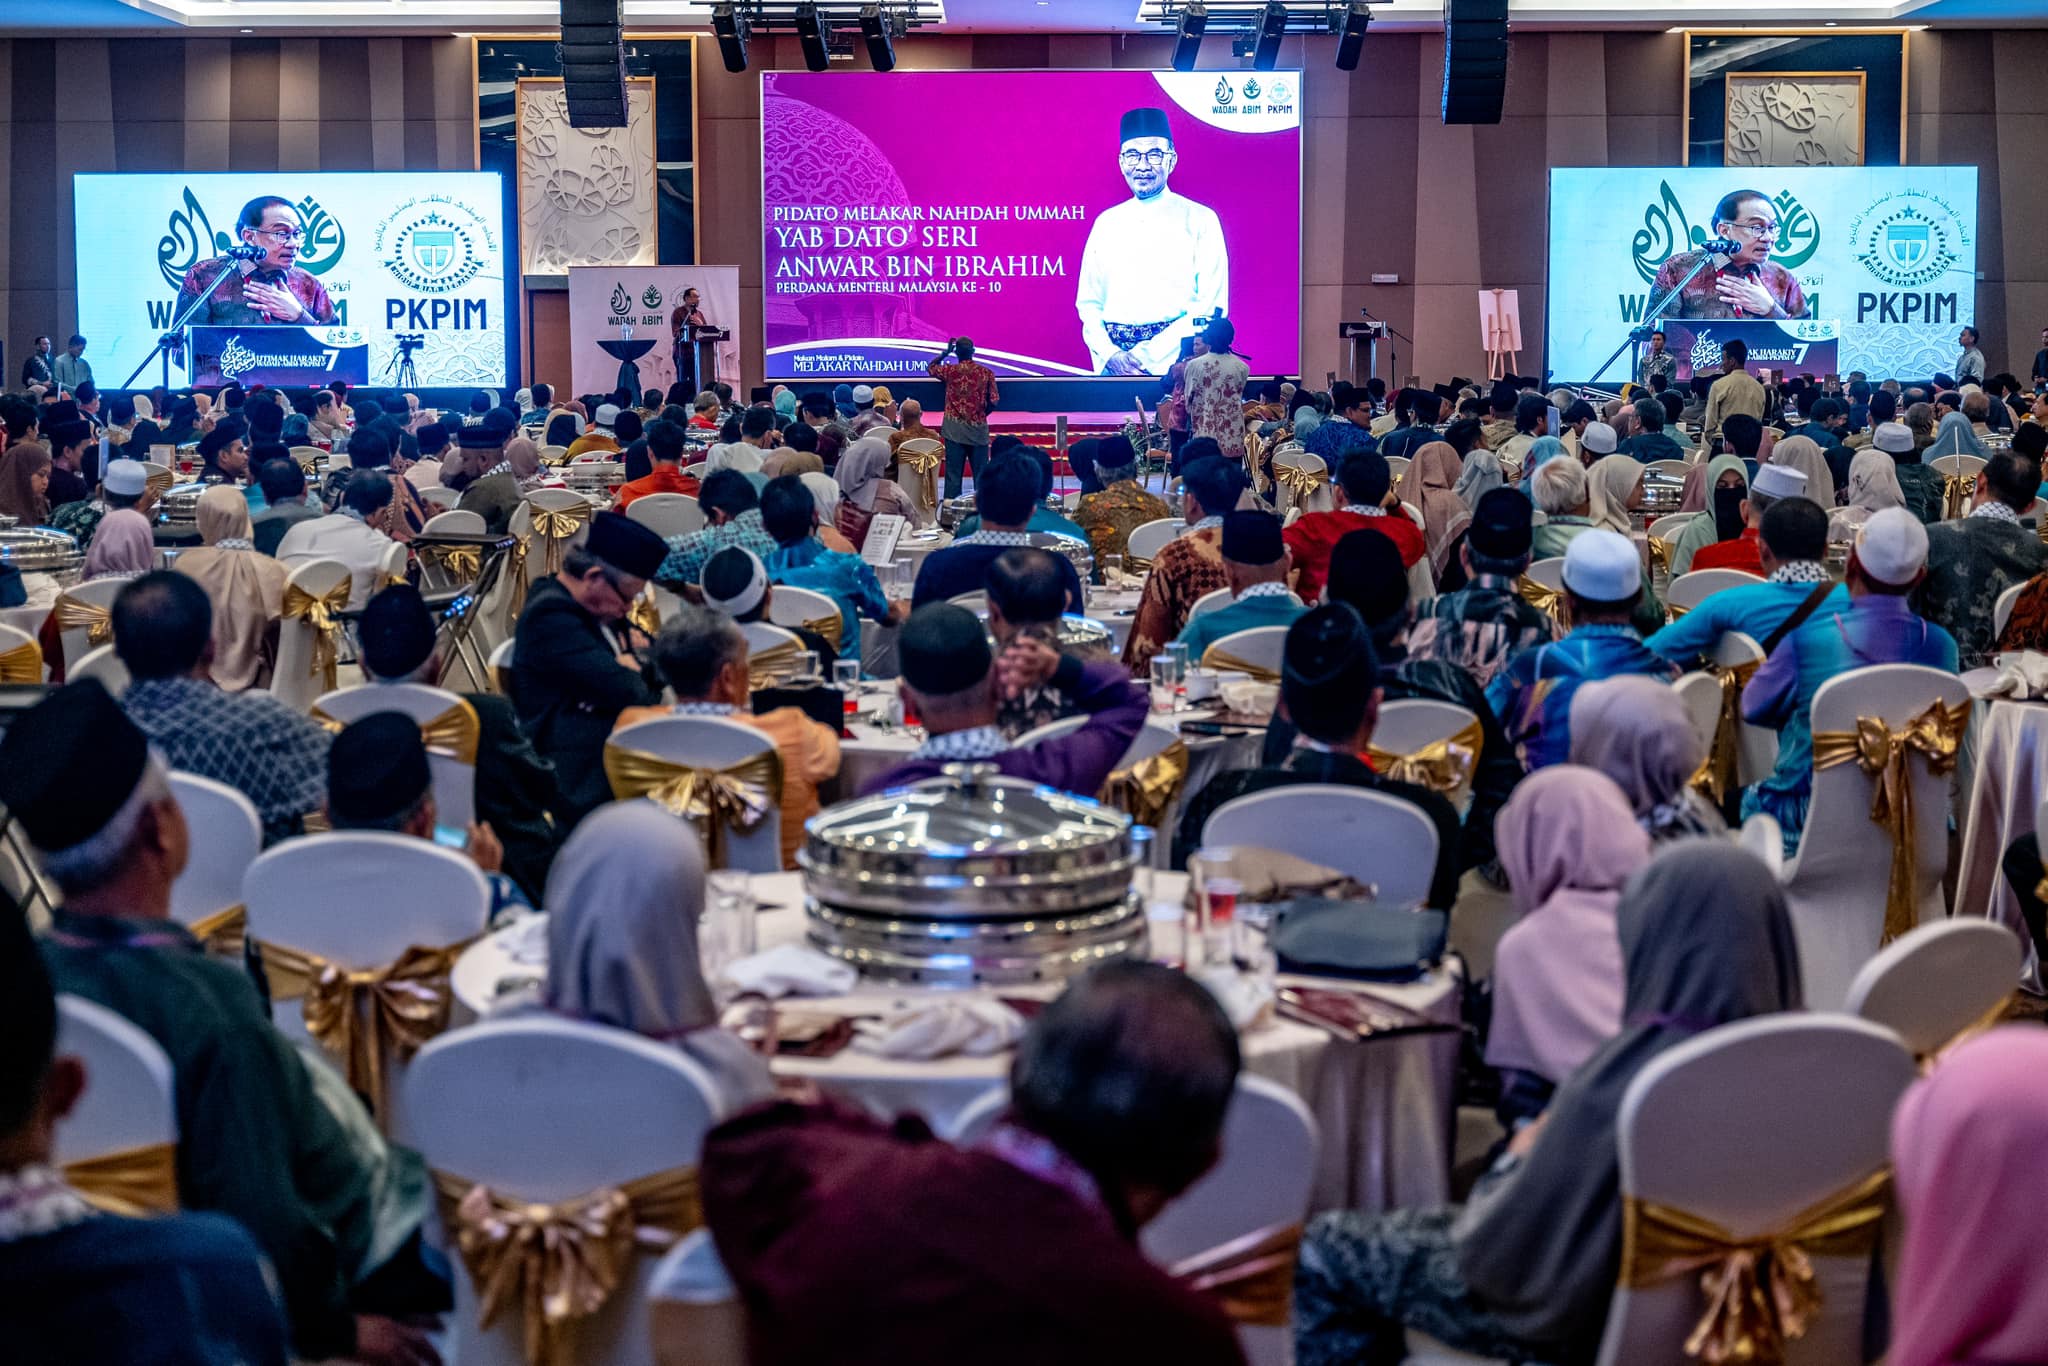 Islamic movements must work harder to enlighten people: Anwar